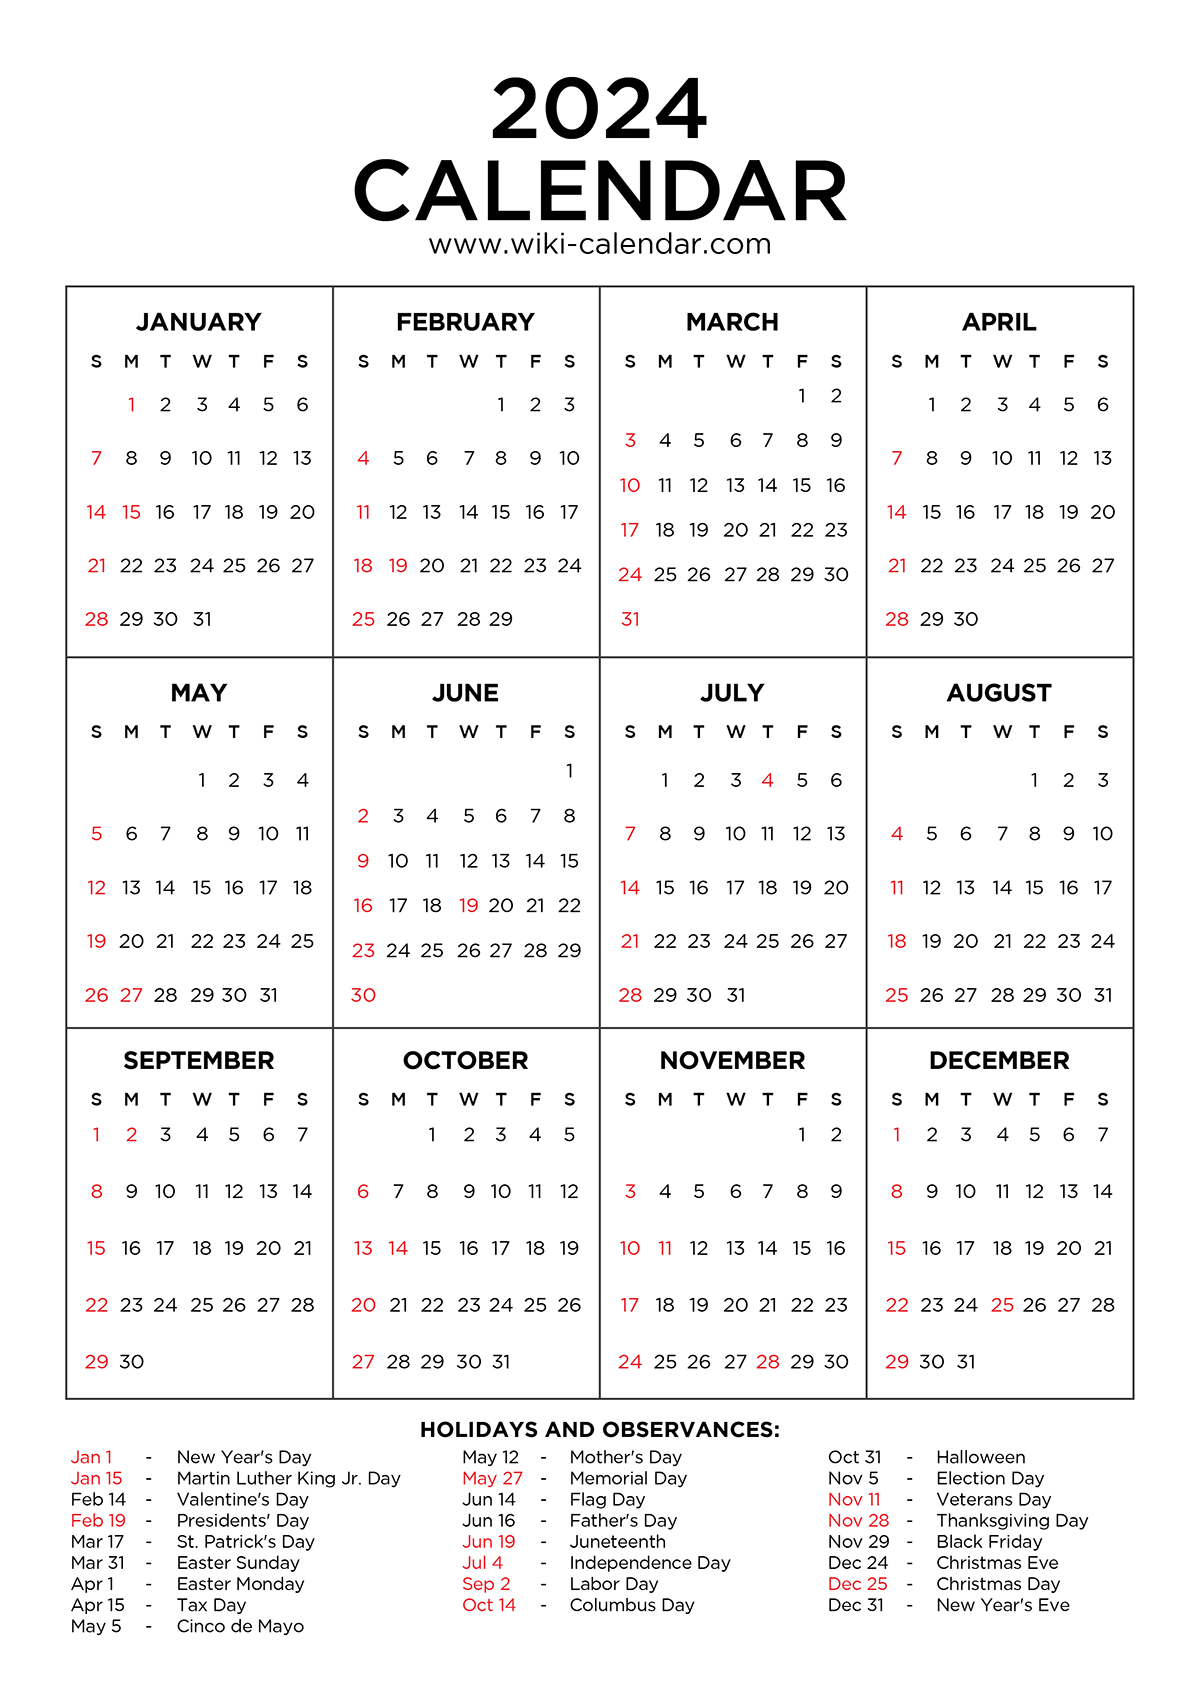 Year 2024 Calendar Printable With Holidays - Wiki Calendar with Free Printable Calendar 2024 Full Year